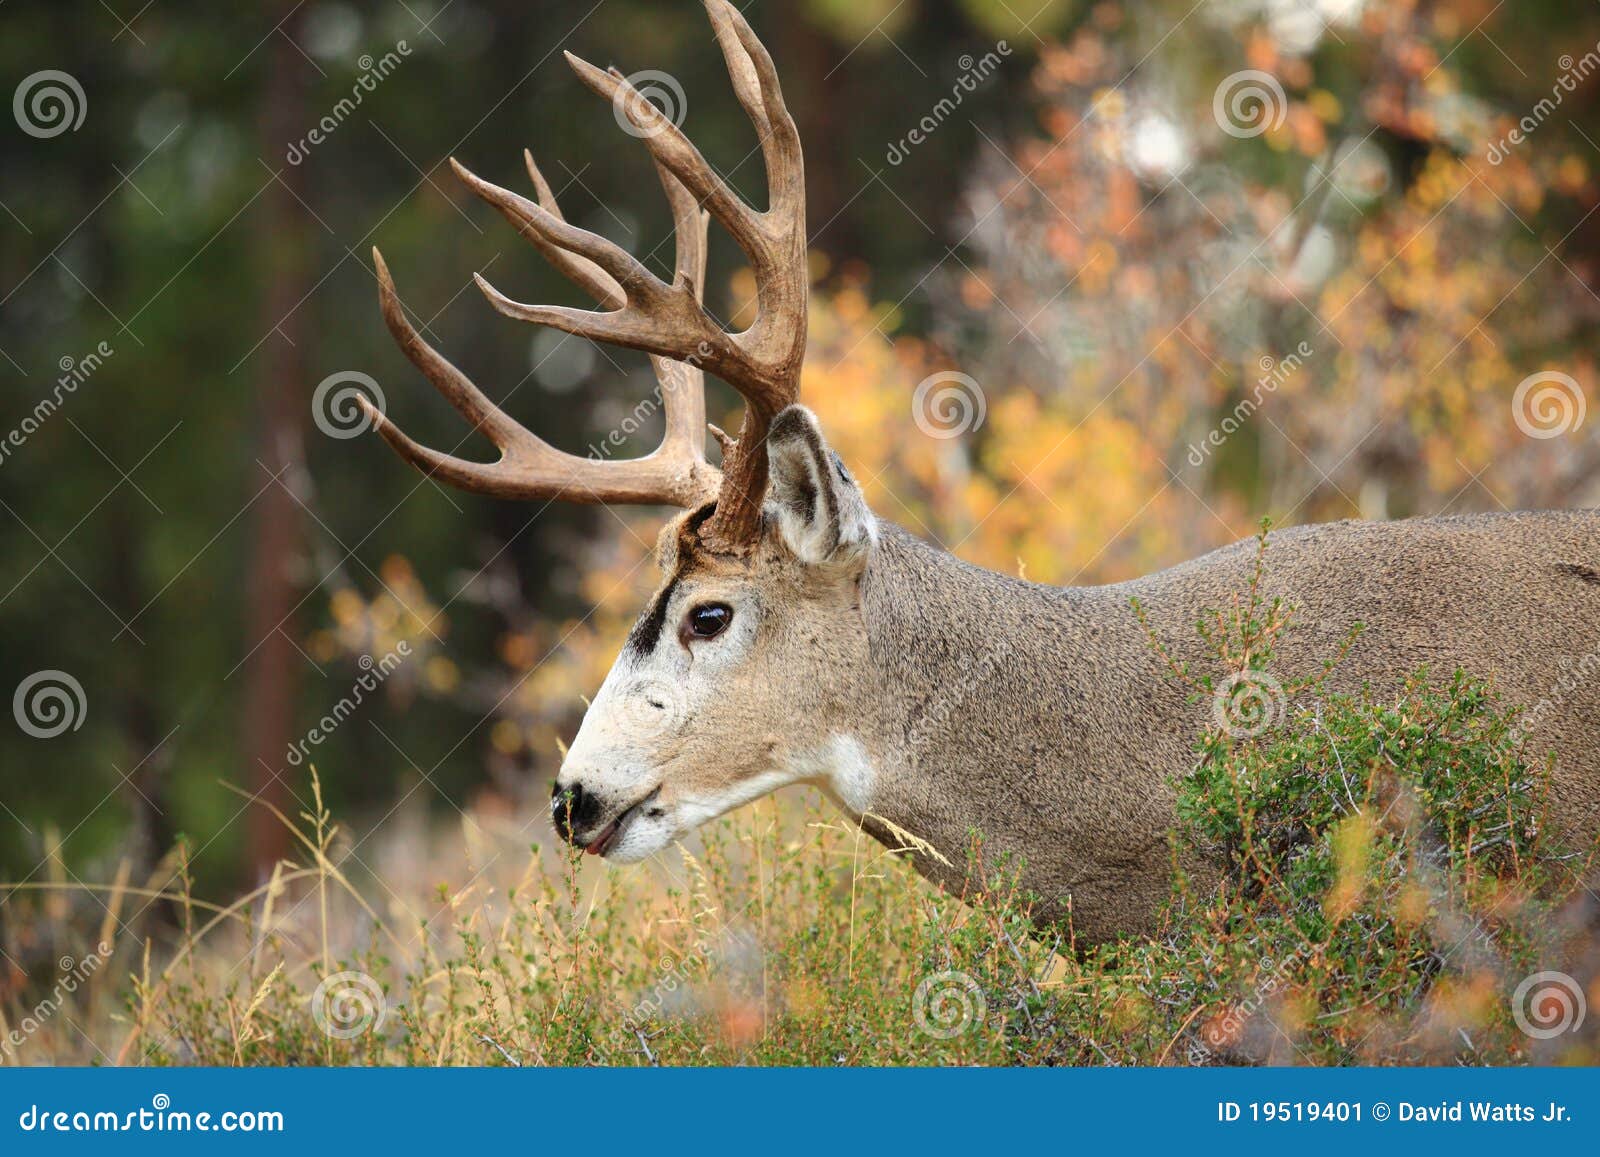 rocky mountain deer